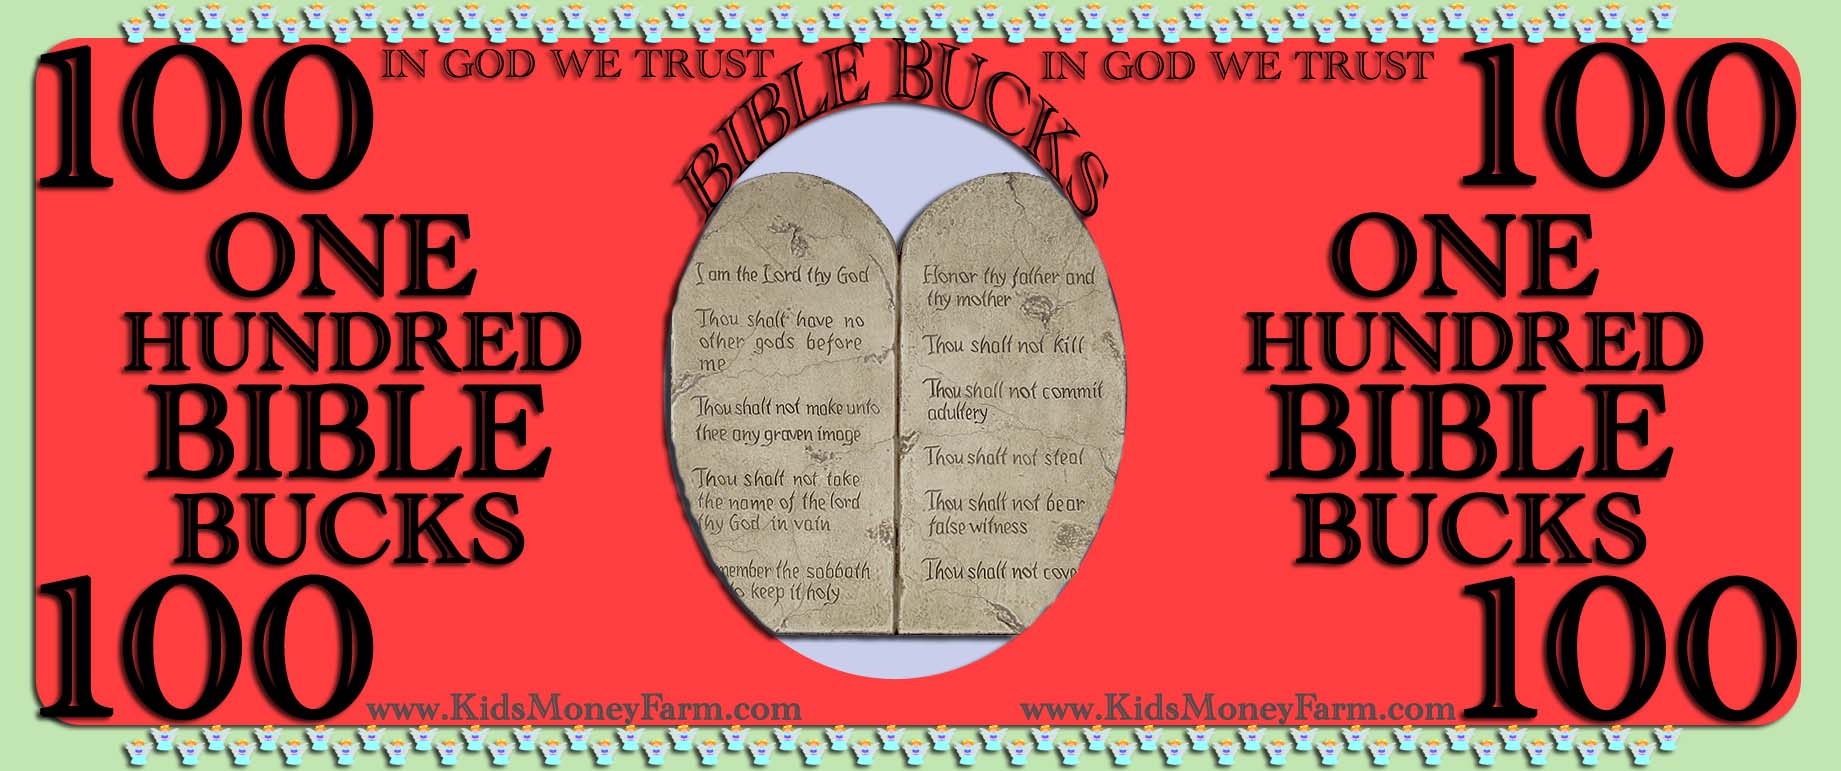 Bible Bucks for Sunday School Kids Ministry Church Play Money Templates